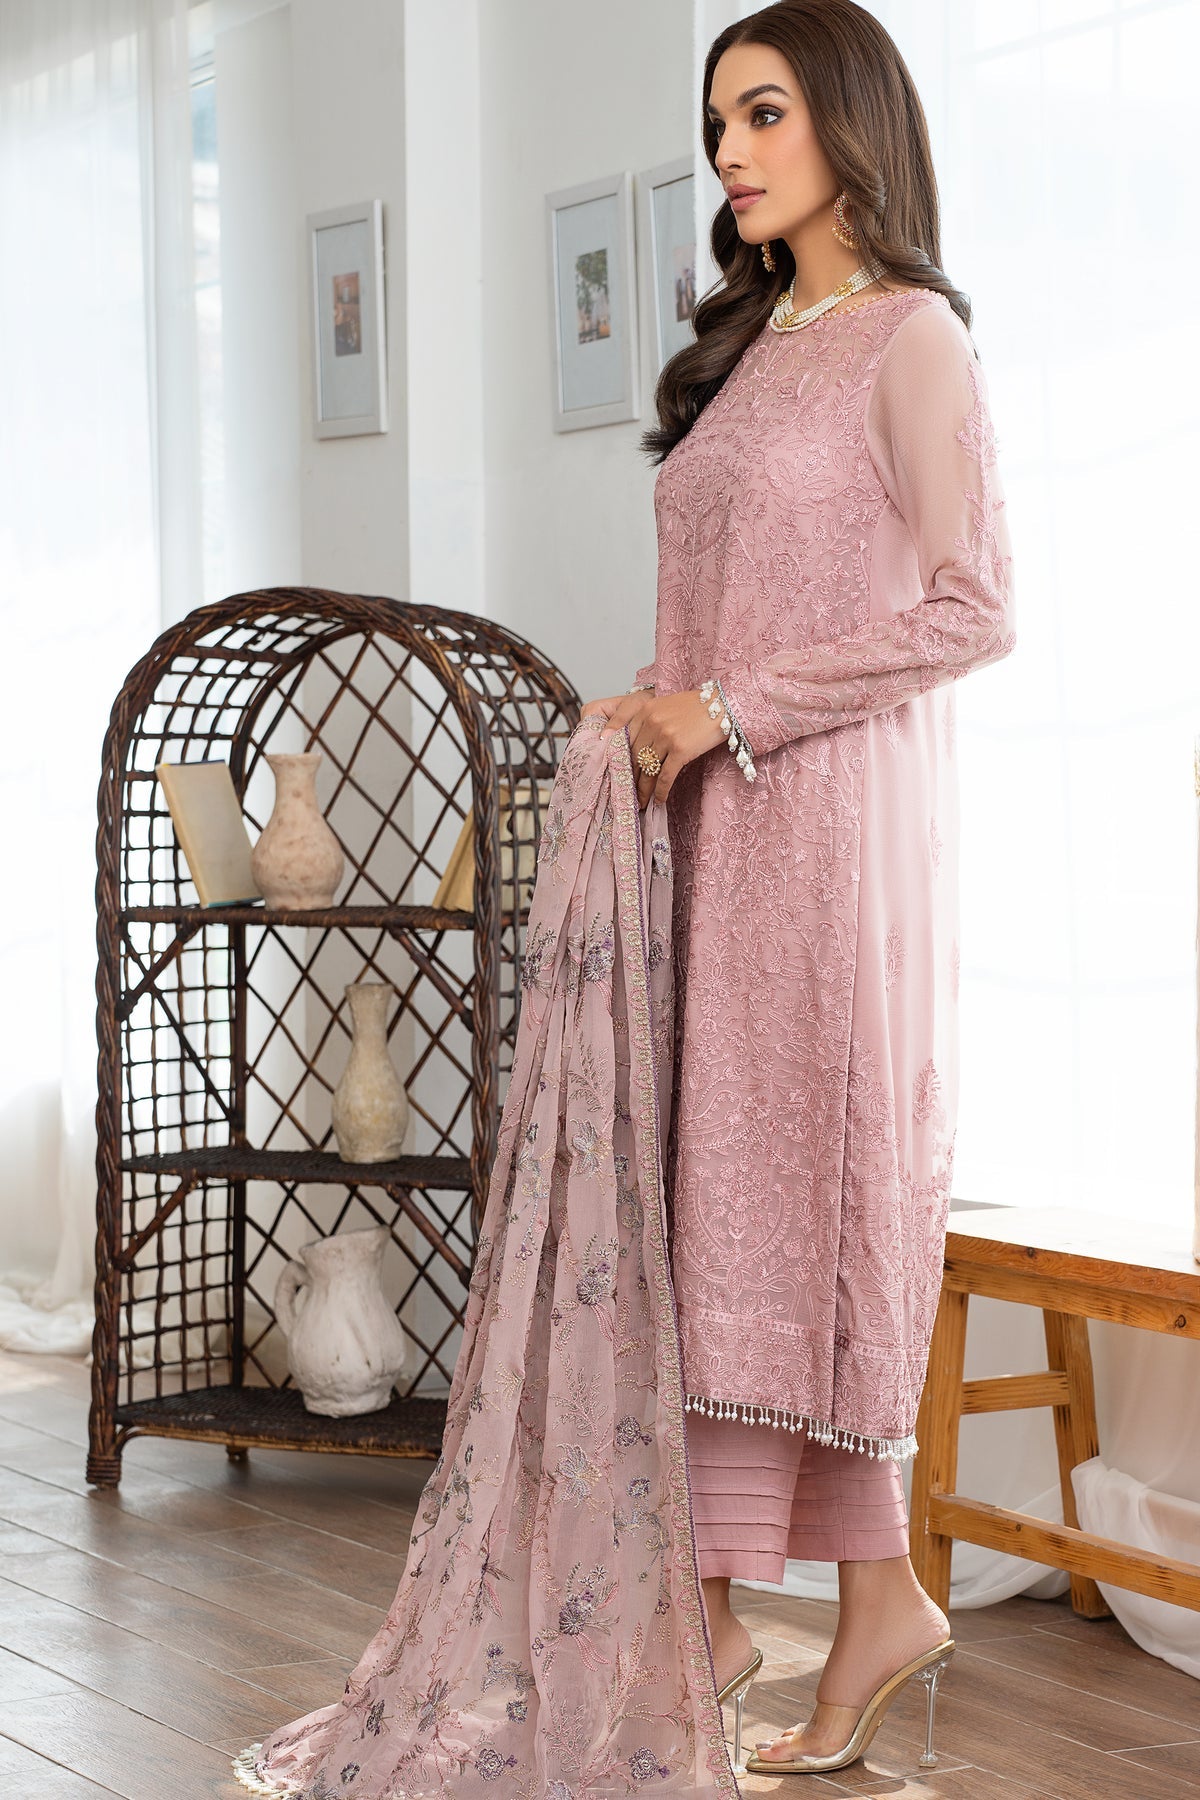 Shop Now, NEHAL - ZLM-03 - Meeral Luxury Formals 2023 - Zarif - Shahana Collection UK - Wedding and Bridal Dresses - Pakistani Dresses in UAE - Shahana UK